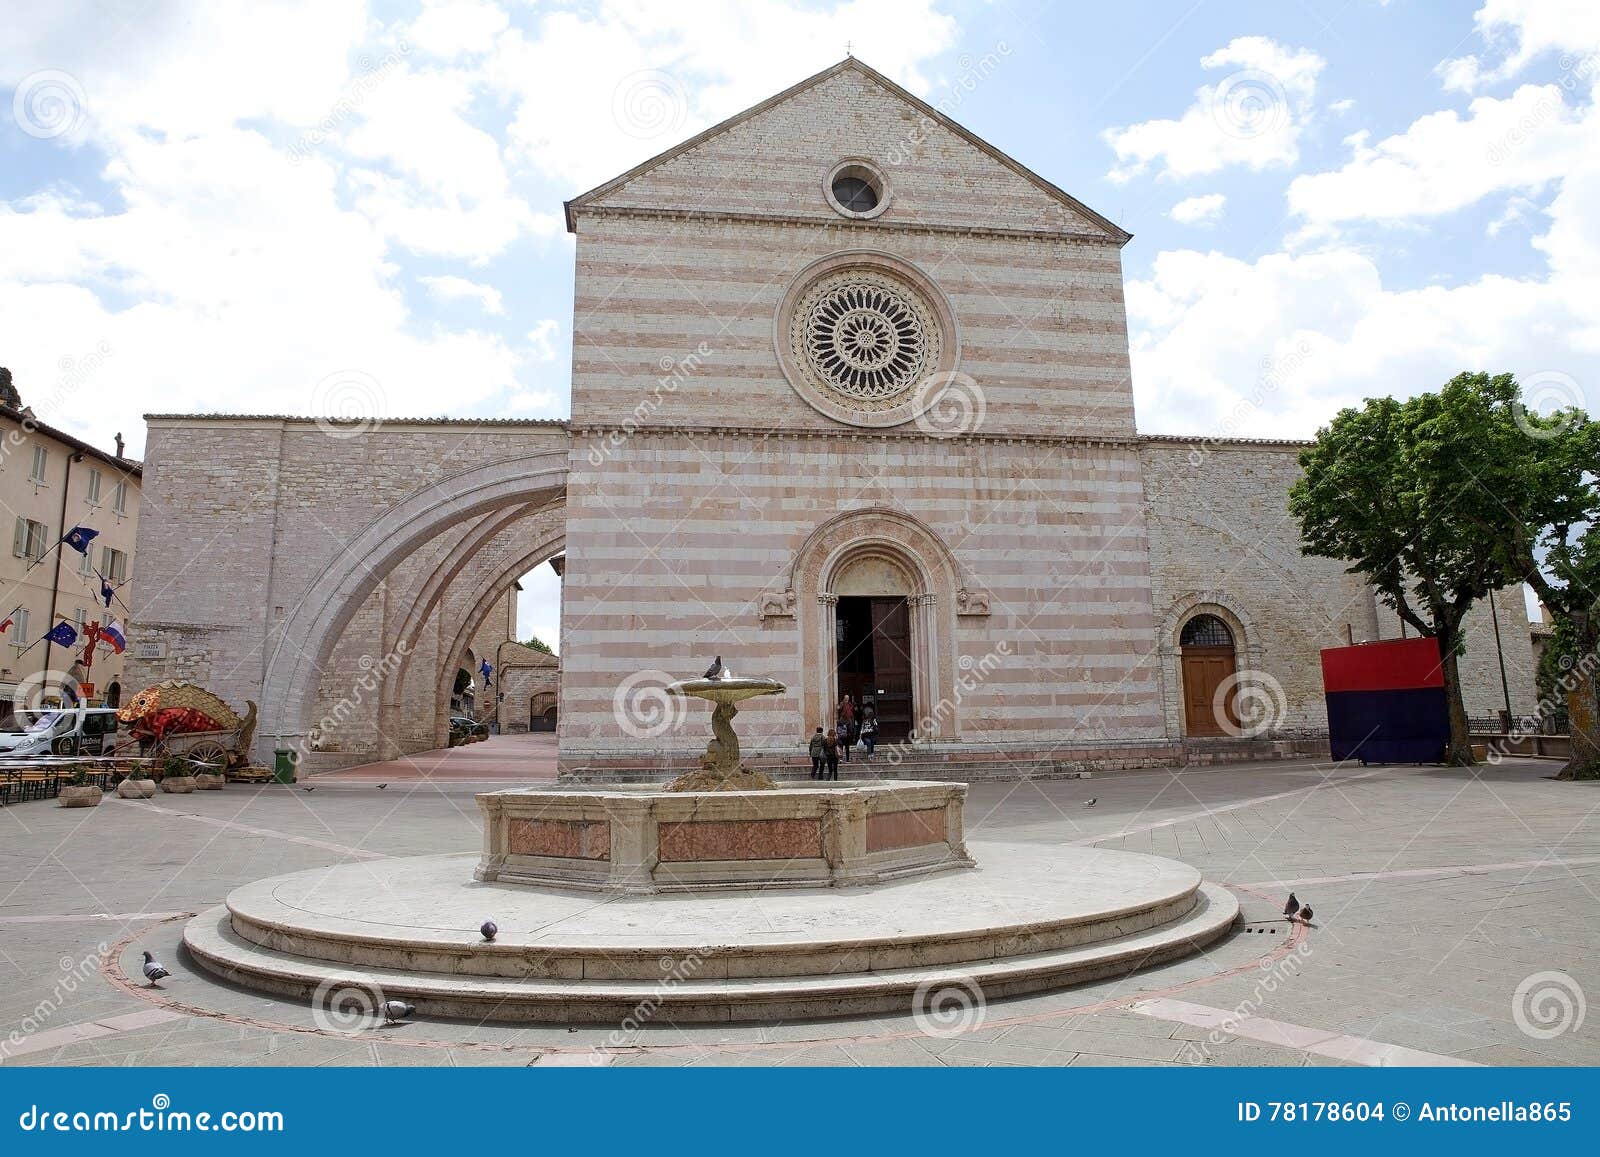 Basilica Of Saint Clare In Assisi Umbria Italy Editorial Stock Image Image Of European